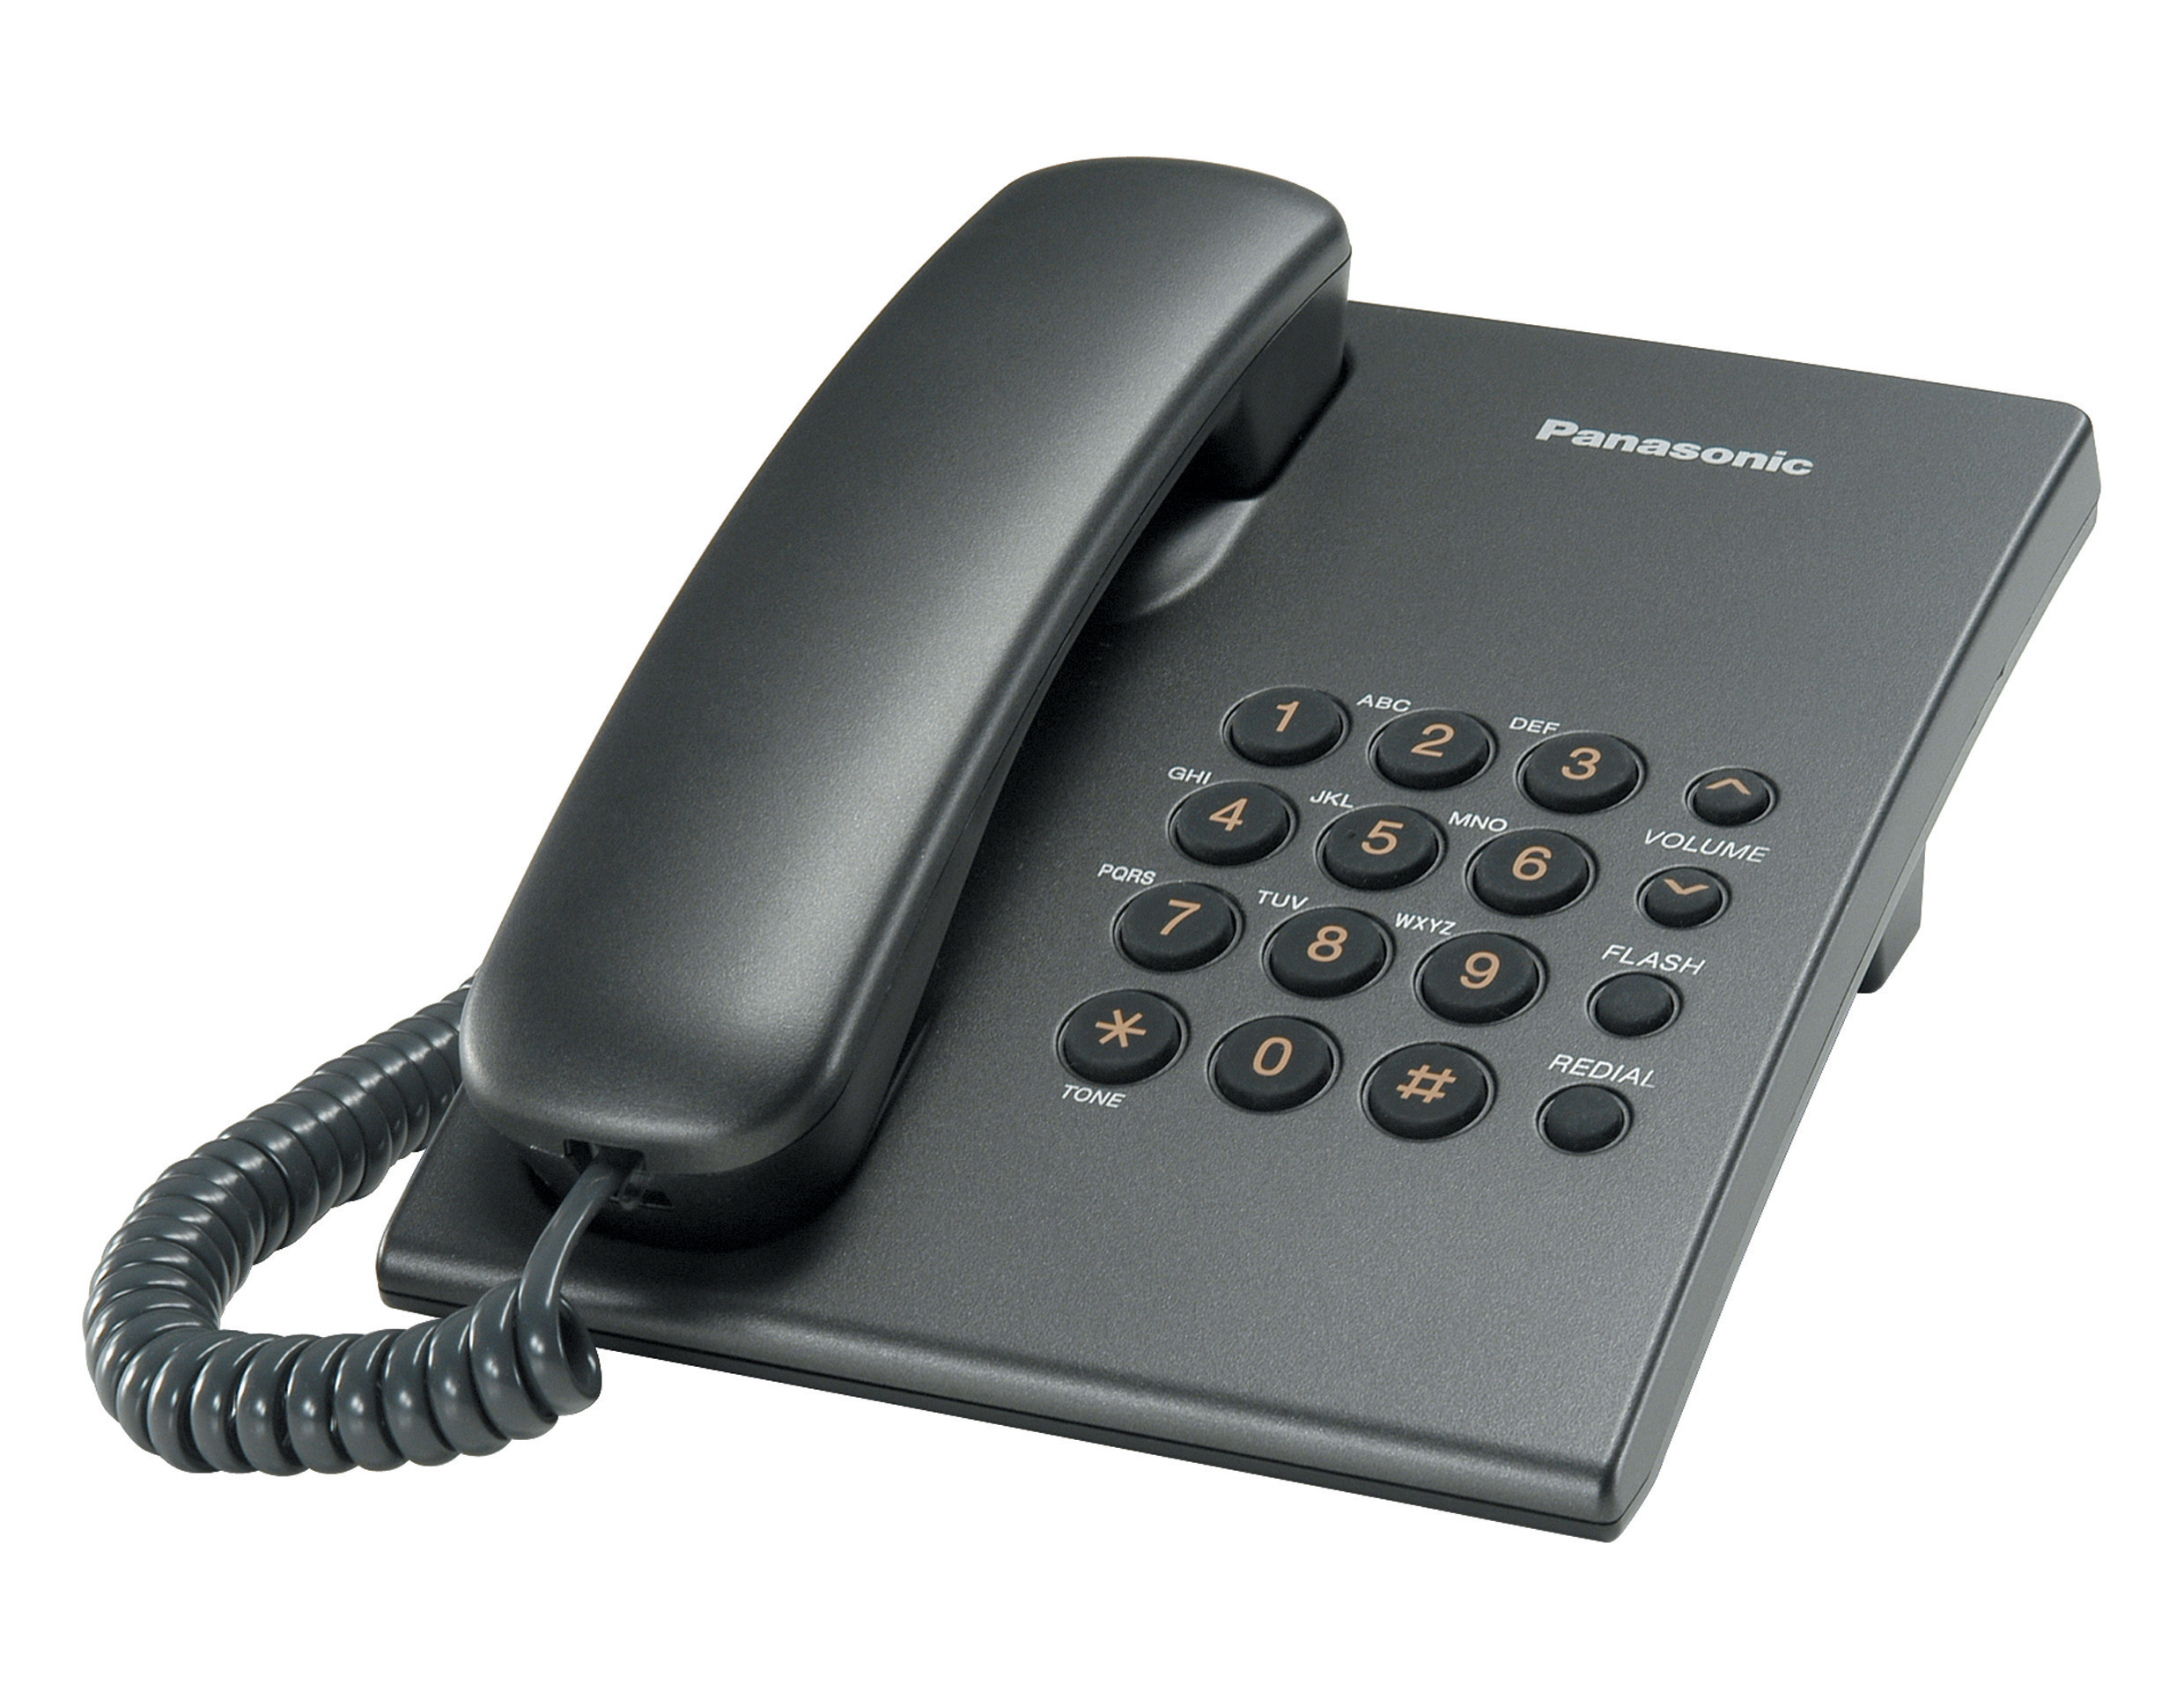 Стационарный телефон ростов. Panasonic KX-ts2350. Panasonic KX-ts2350ru. KX-ts2350uab. Телефон проводной Panasonic KX-ts2350.